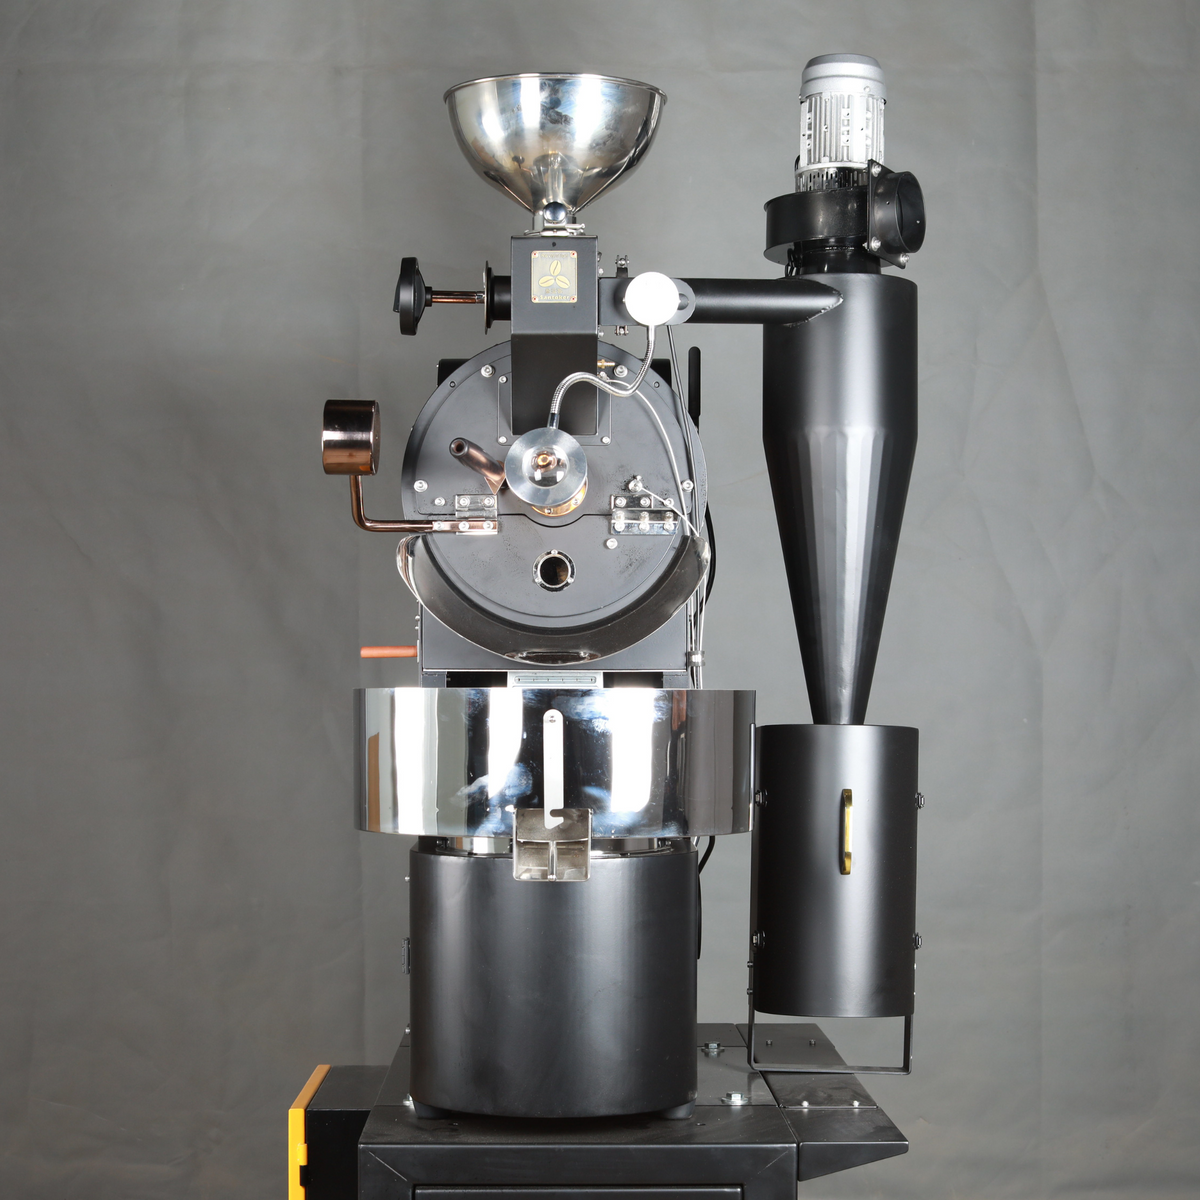 Santoker R3 自動咖啡烘焙機 - 3公斤/批